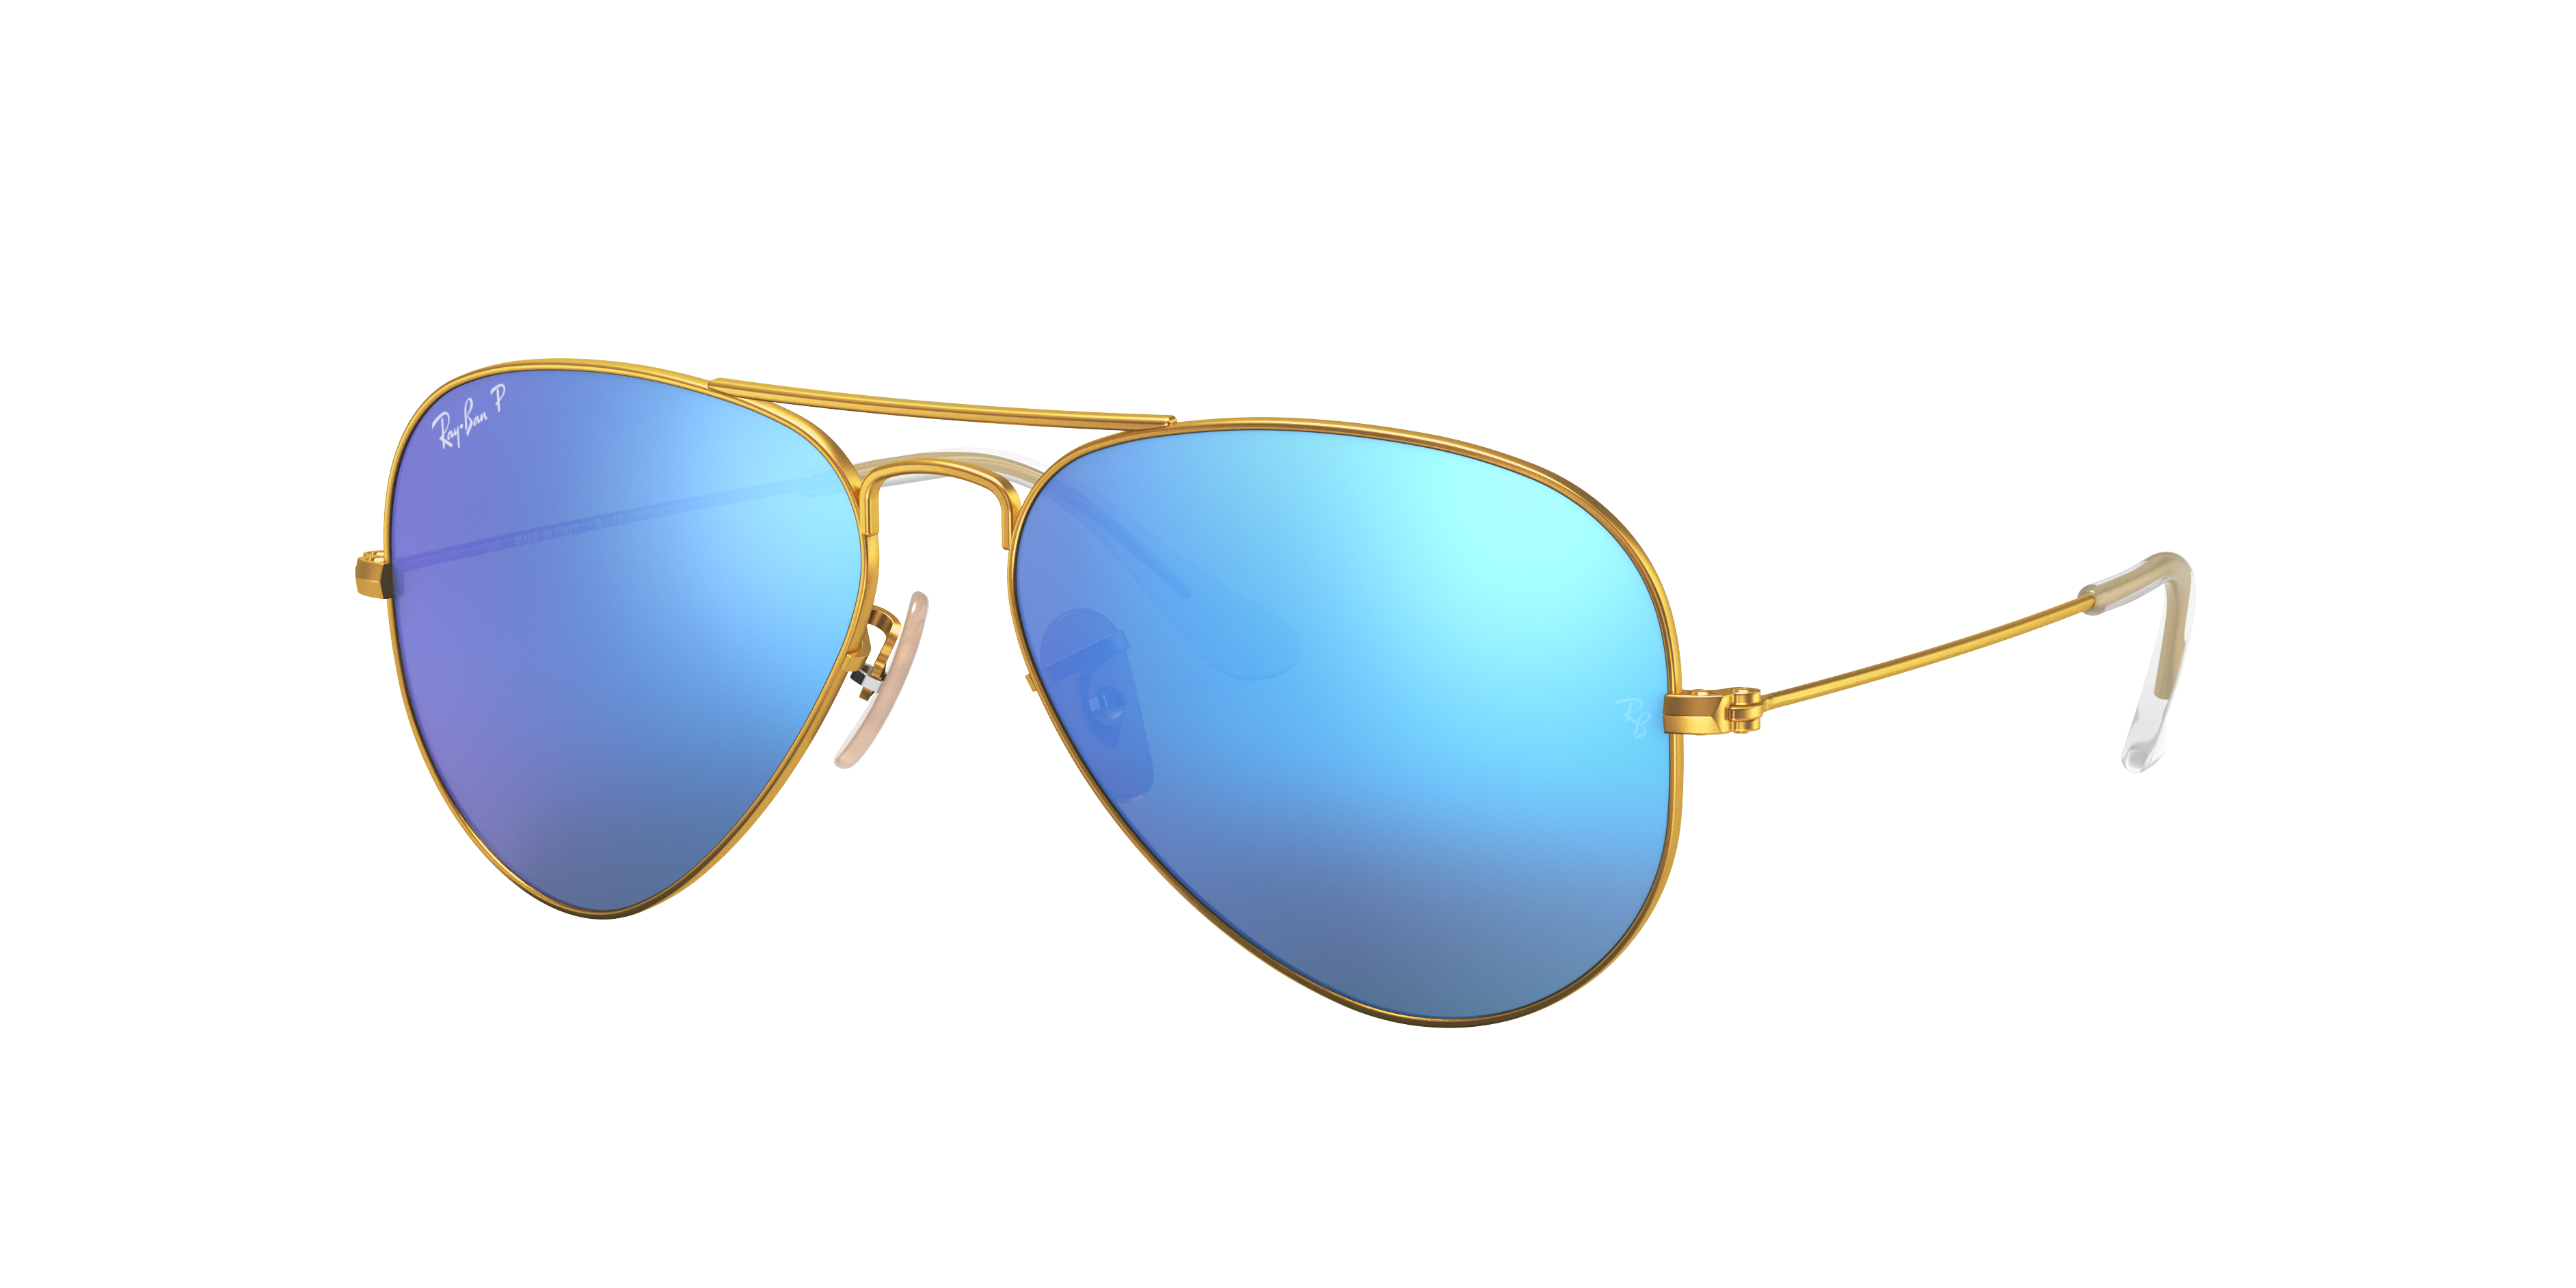 Ray Ban Rb3025 Aviator Flash Lenses Polarized Blue Gold Polarised Sunglasses Sunglass Hut United Kingdom